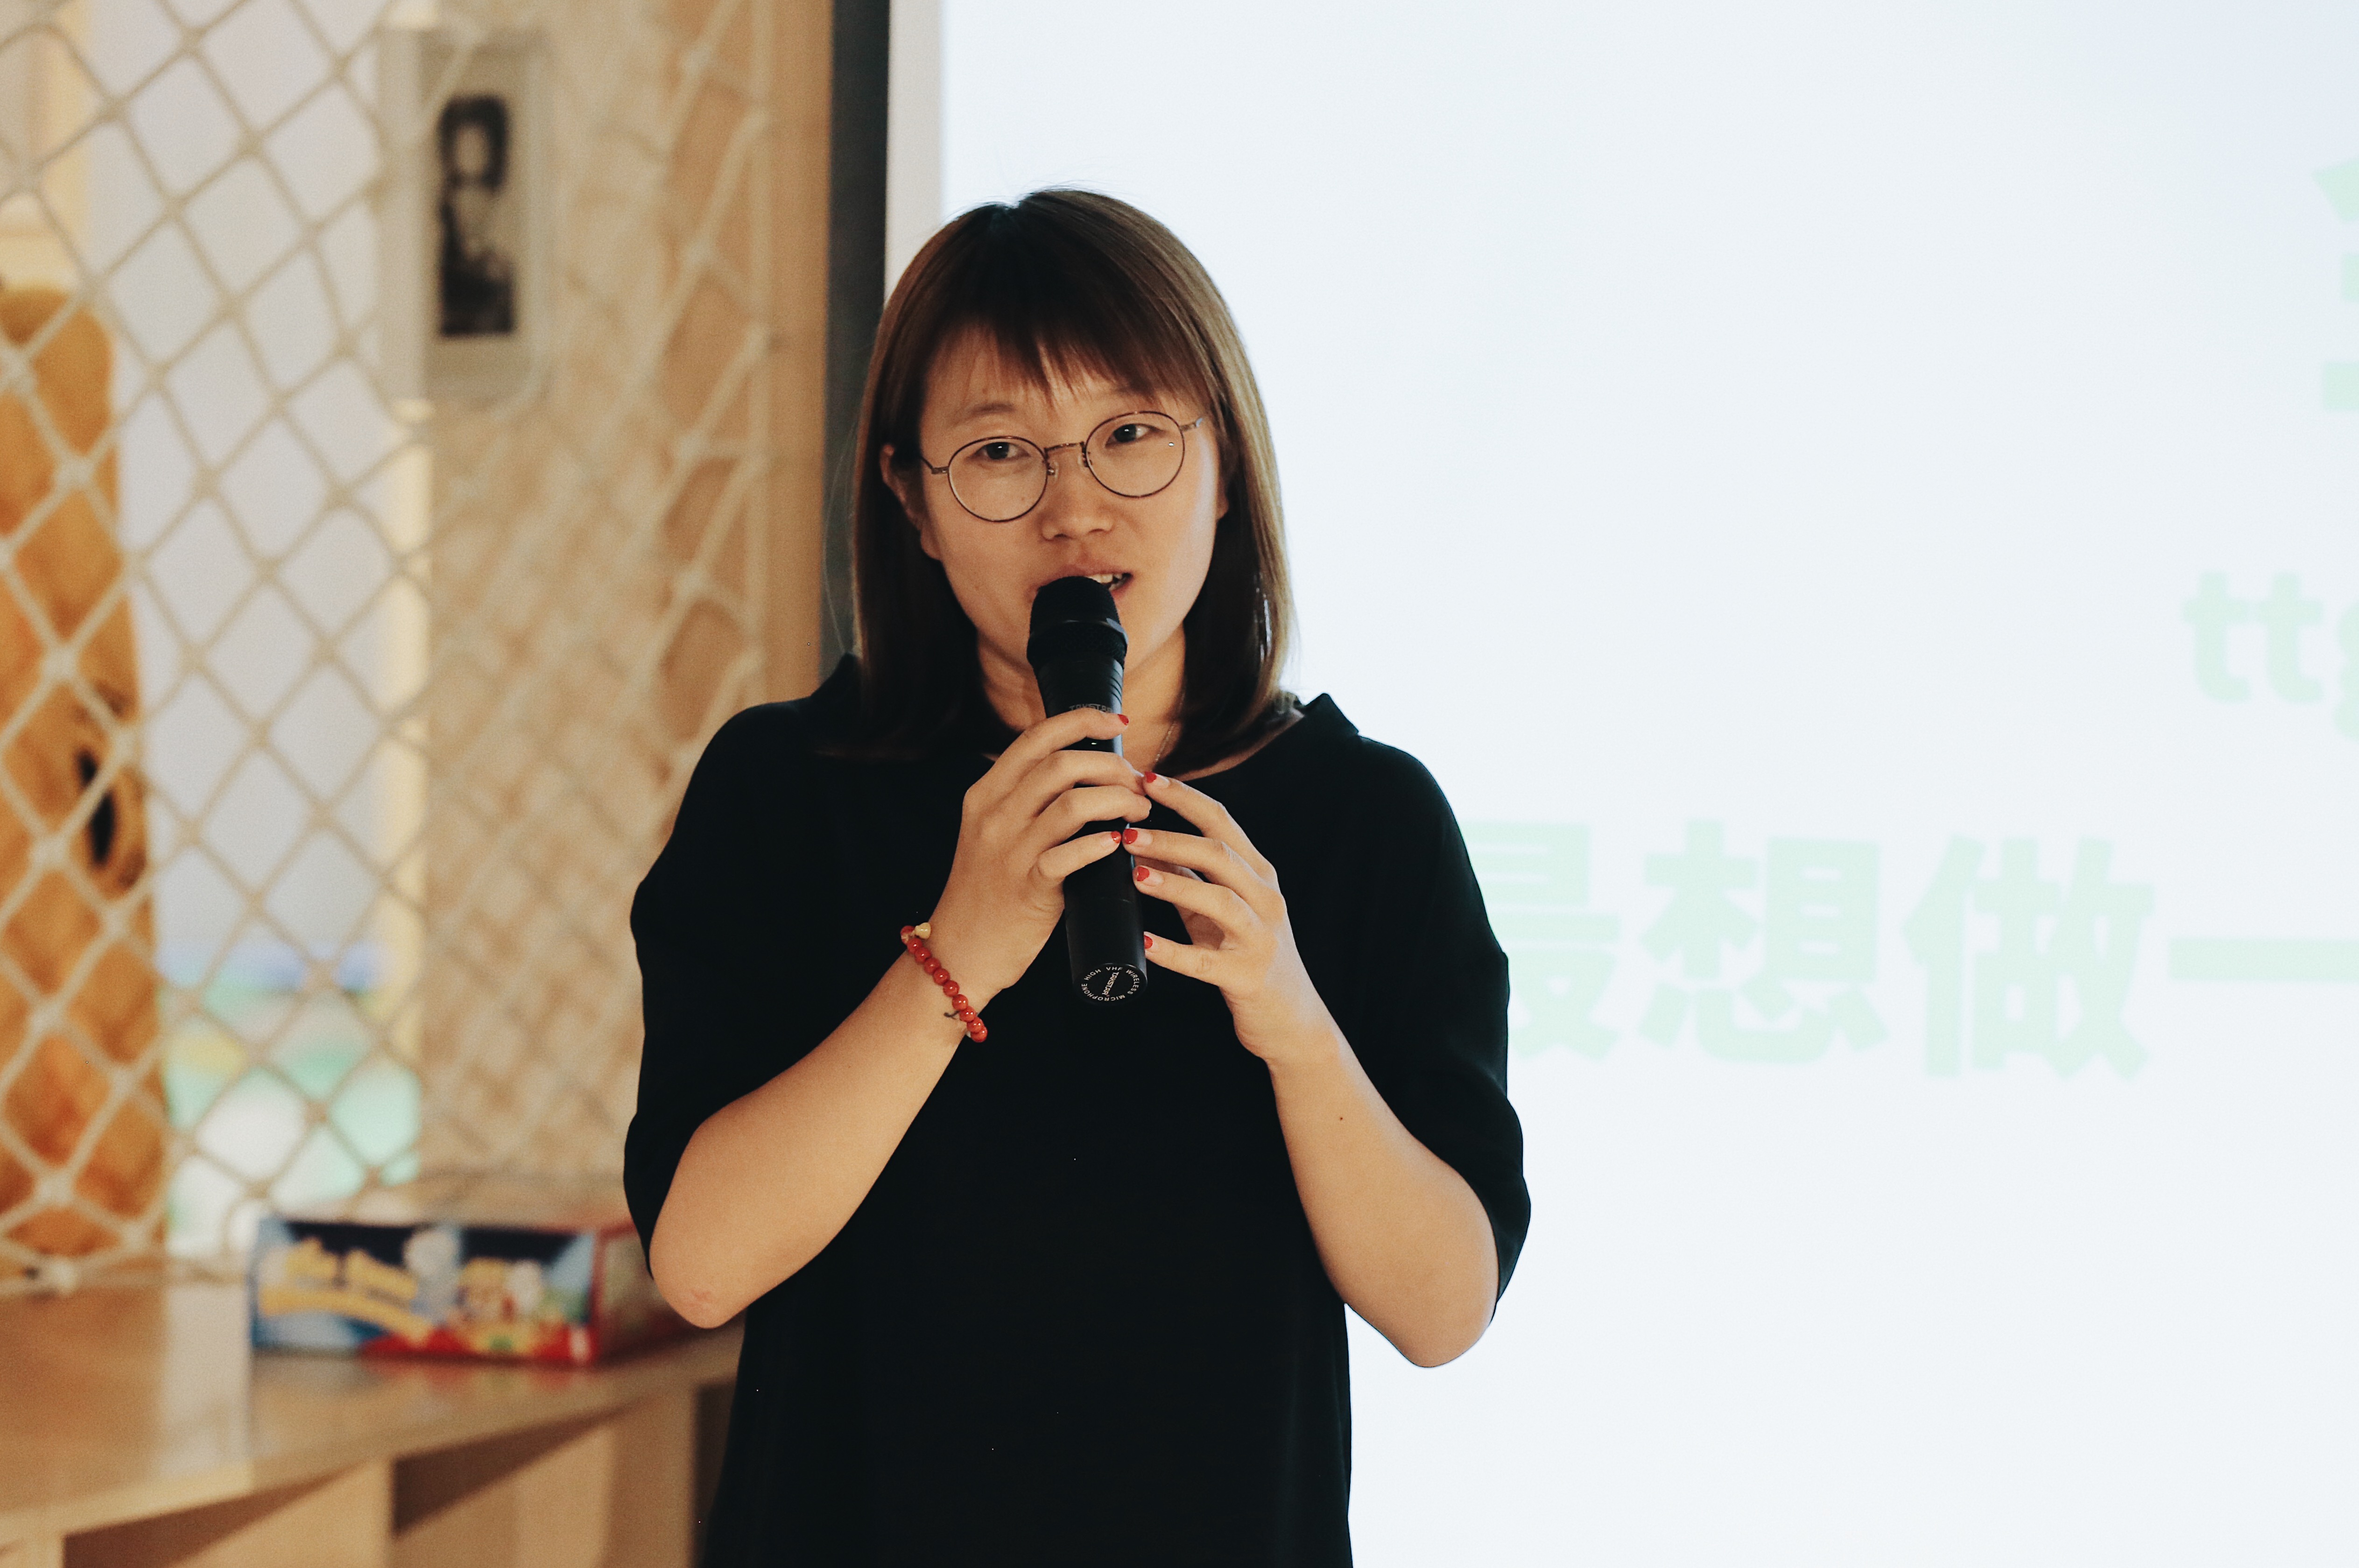 ttg 创始人兼CEO金海鑫入选了今年的“胡润 Under 30s 创业领袖”。